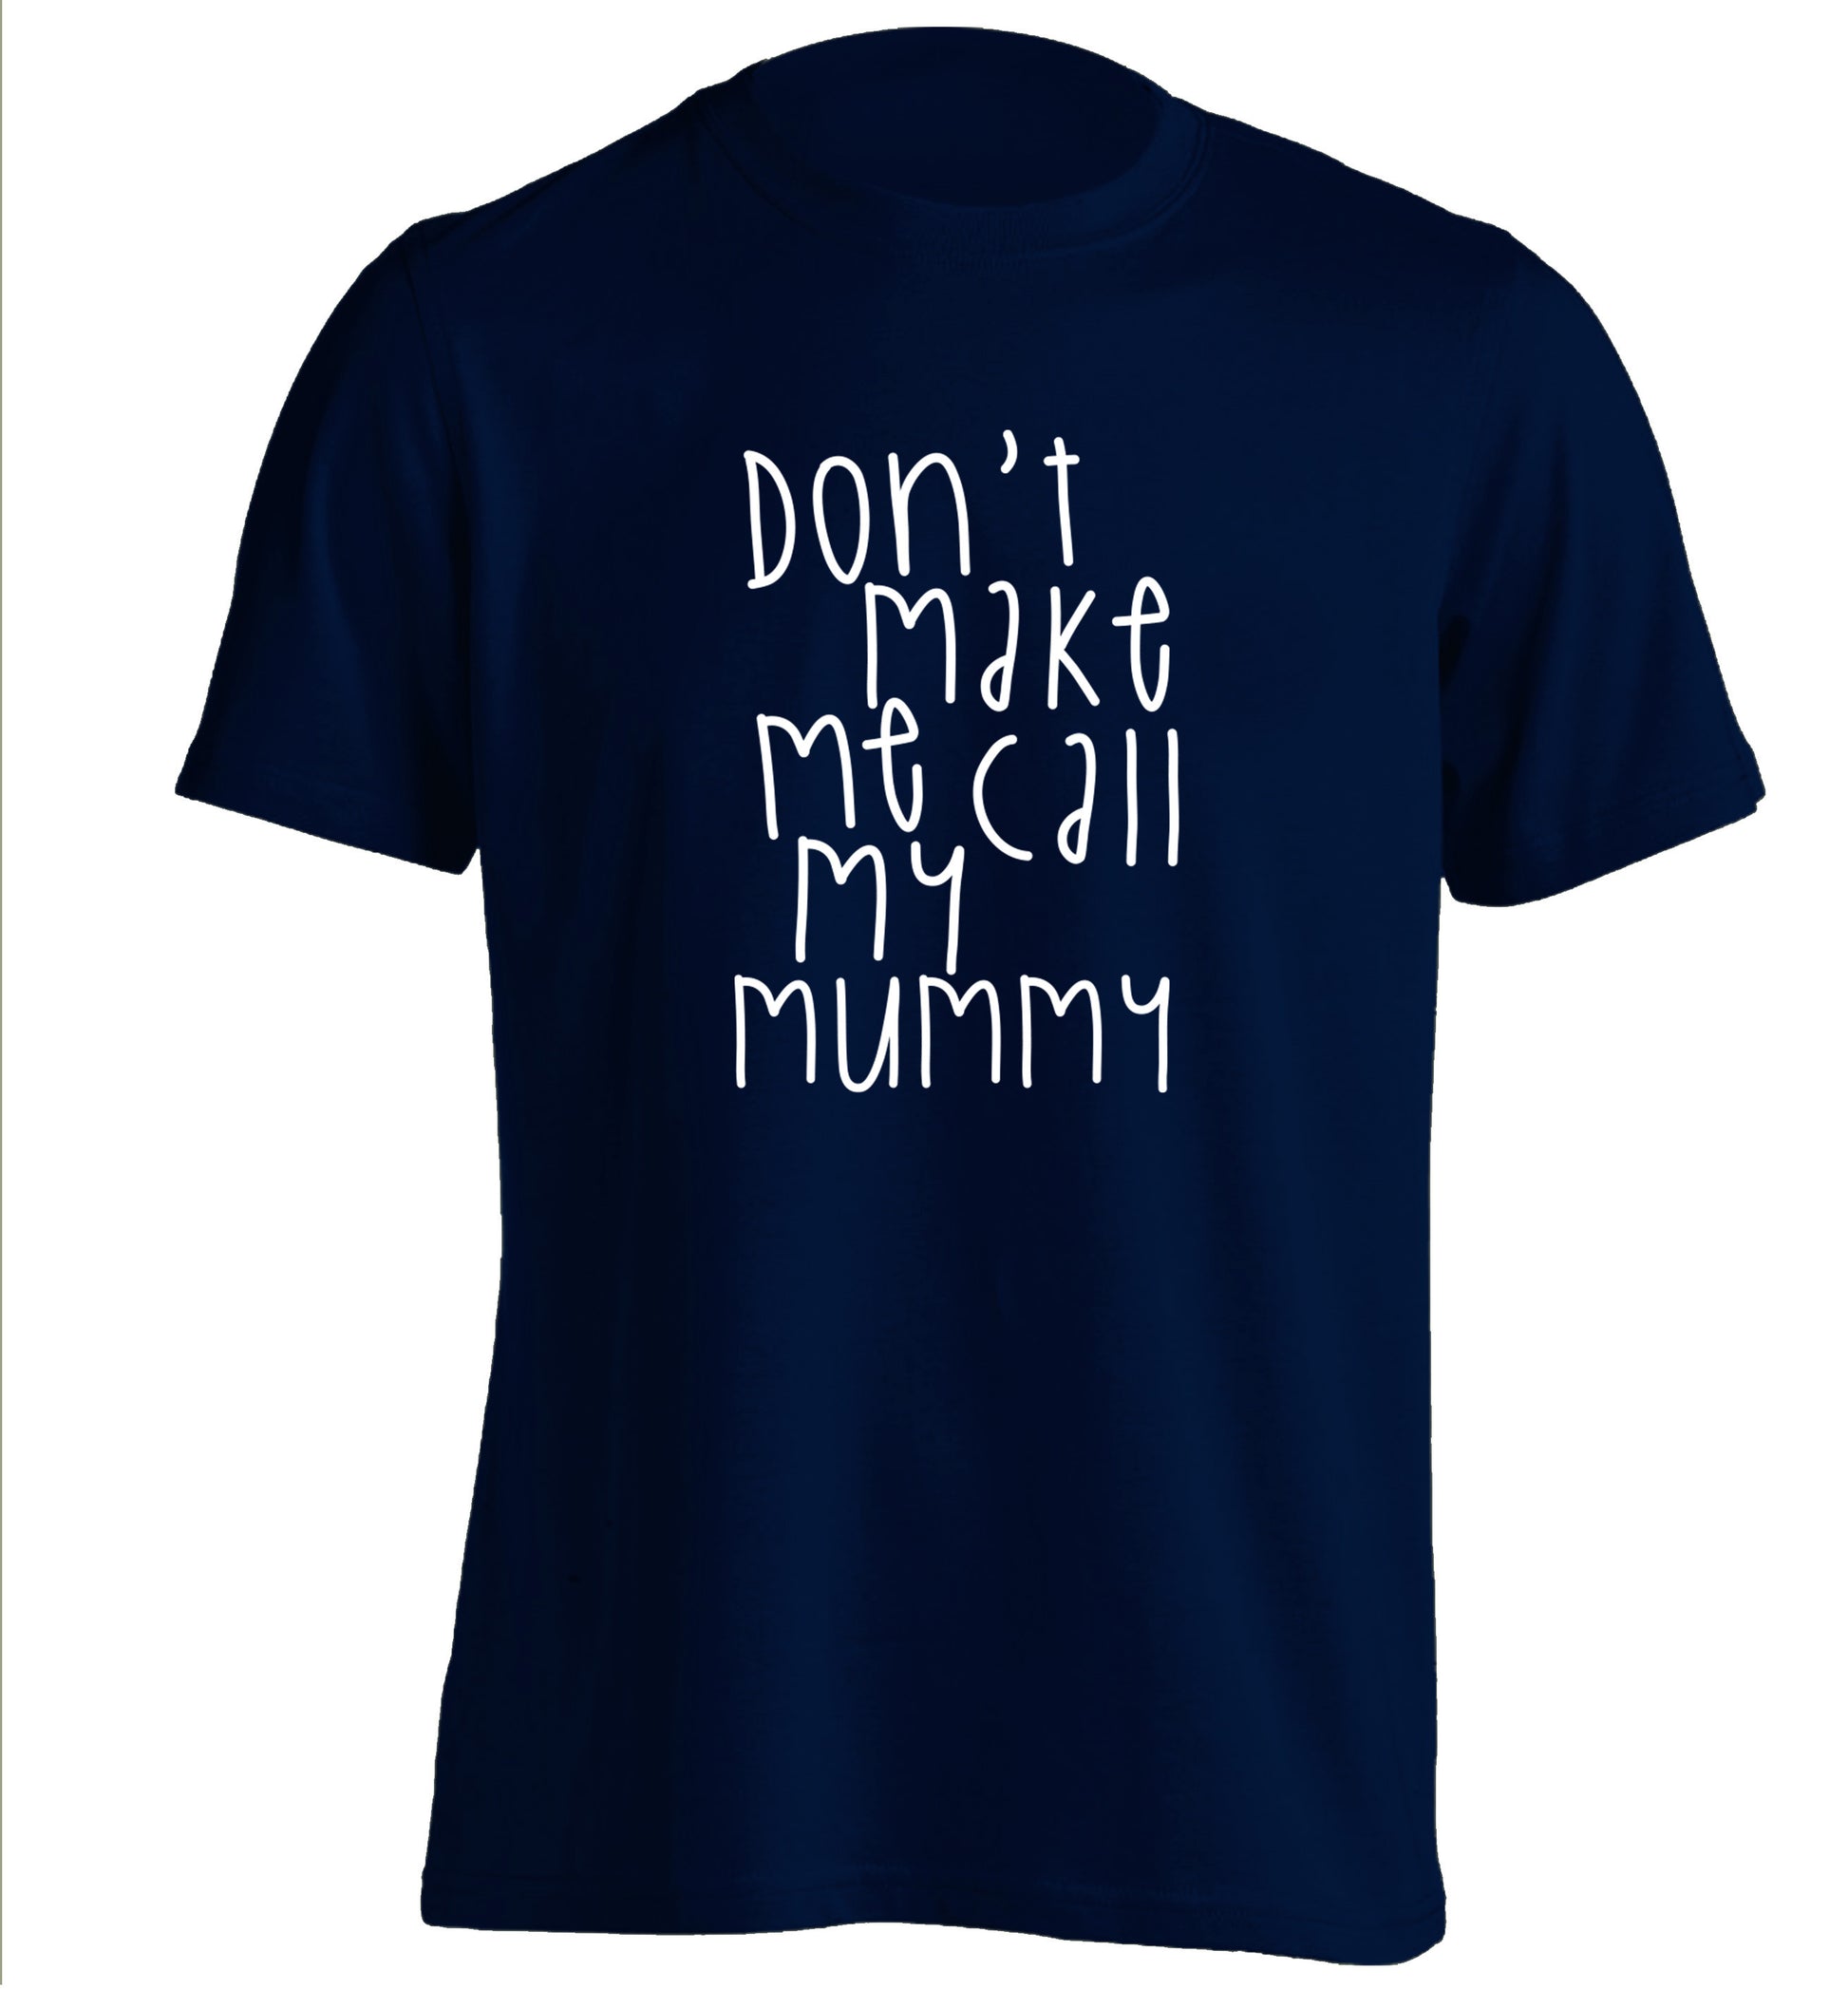 Don't make me call my mummy adults unisex navy Tshirt 2XL